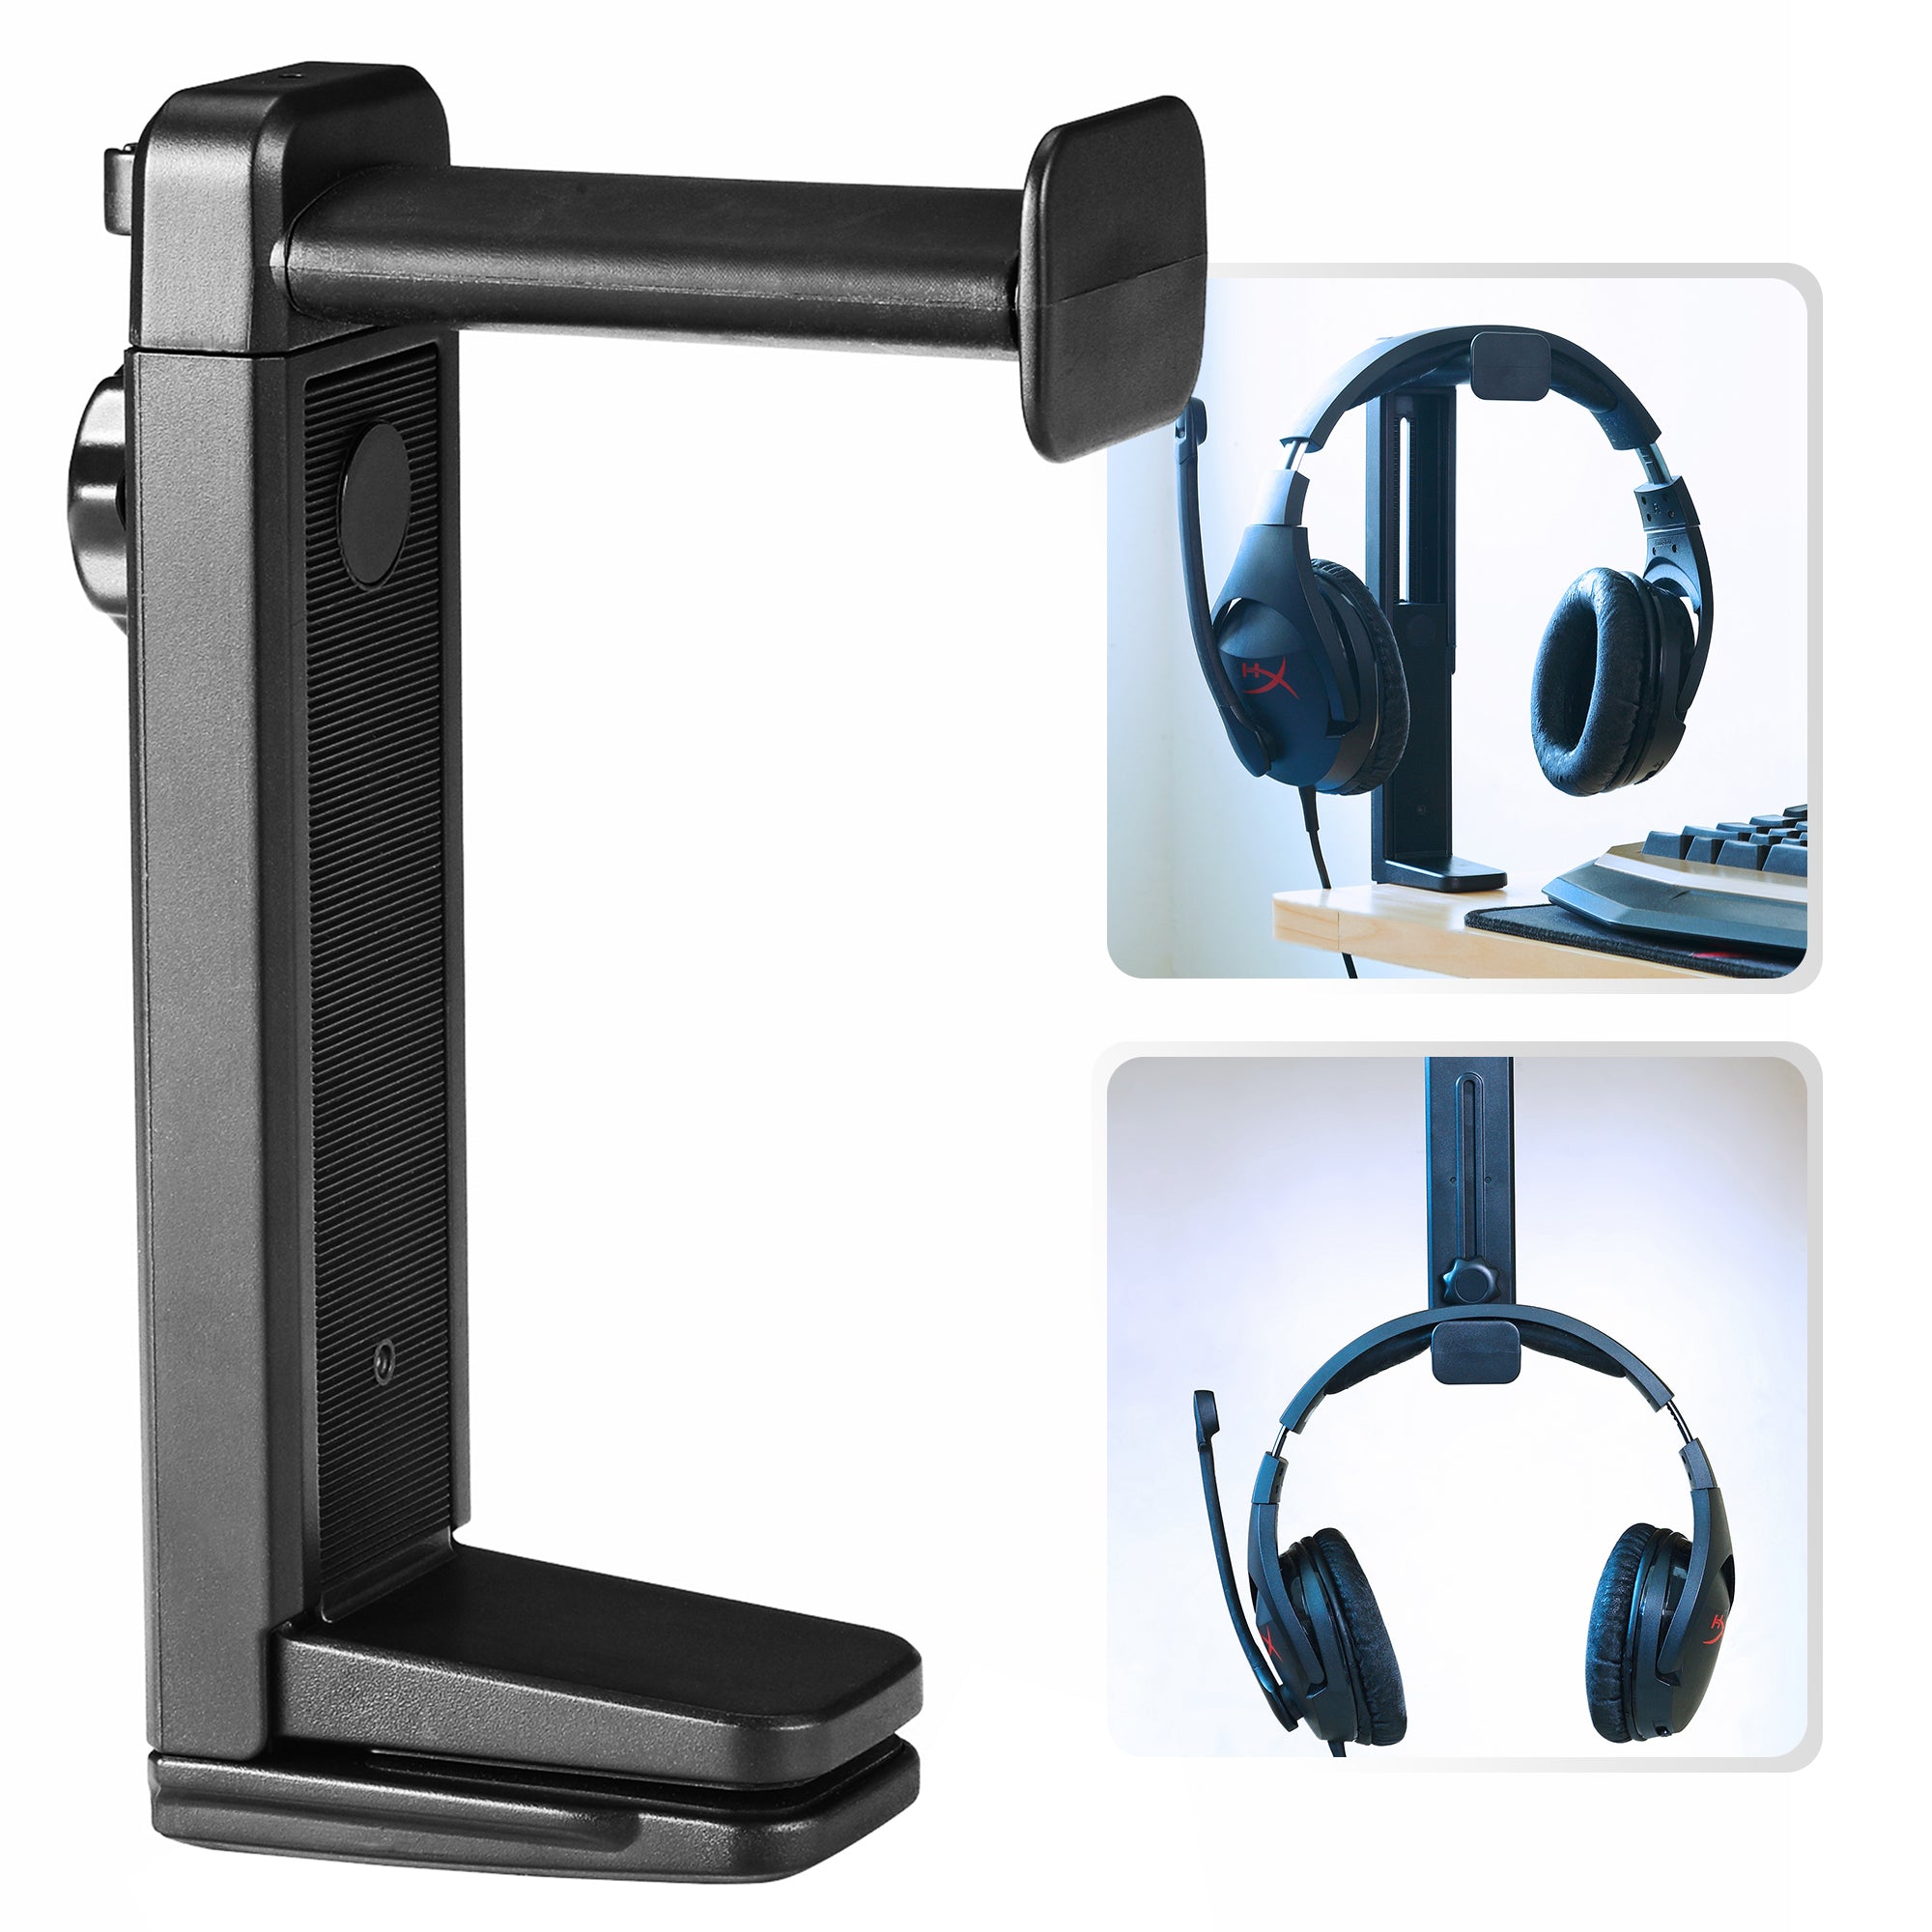 An adjustable desk mounted headphone stand with premium headphones